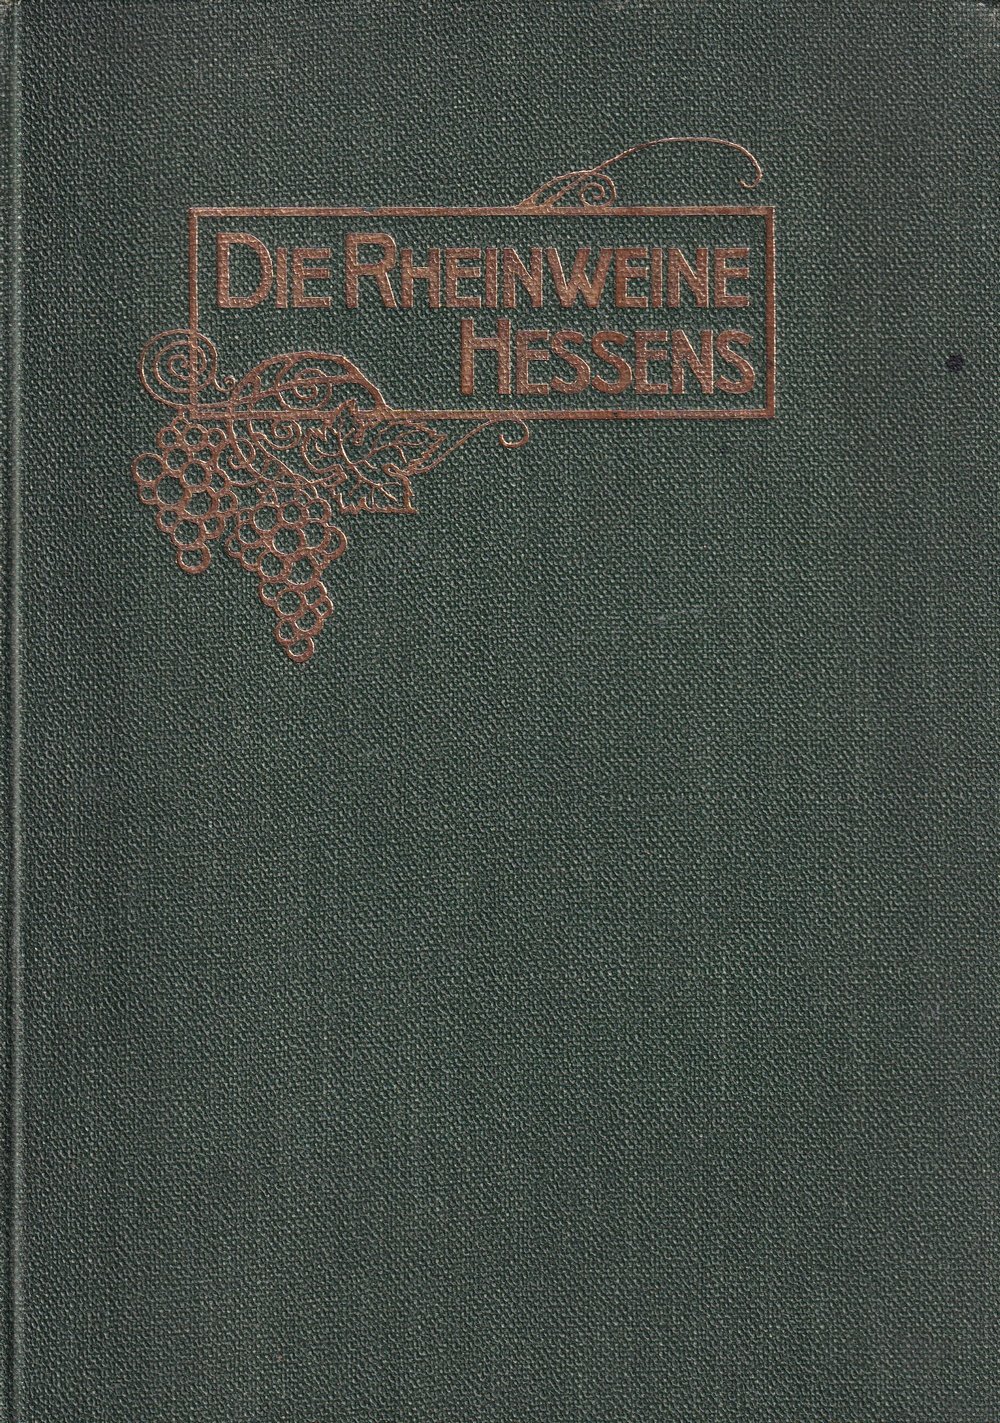 Die Rheinweine Hessens 1910 (Kulturverein Guntersblum CC BY-NC-SA)